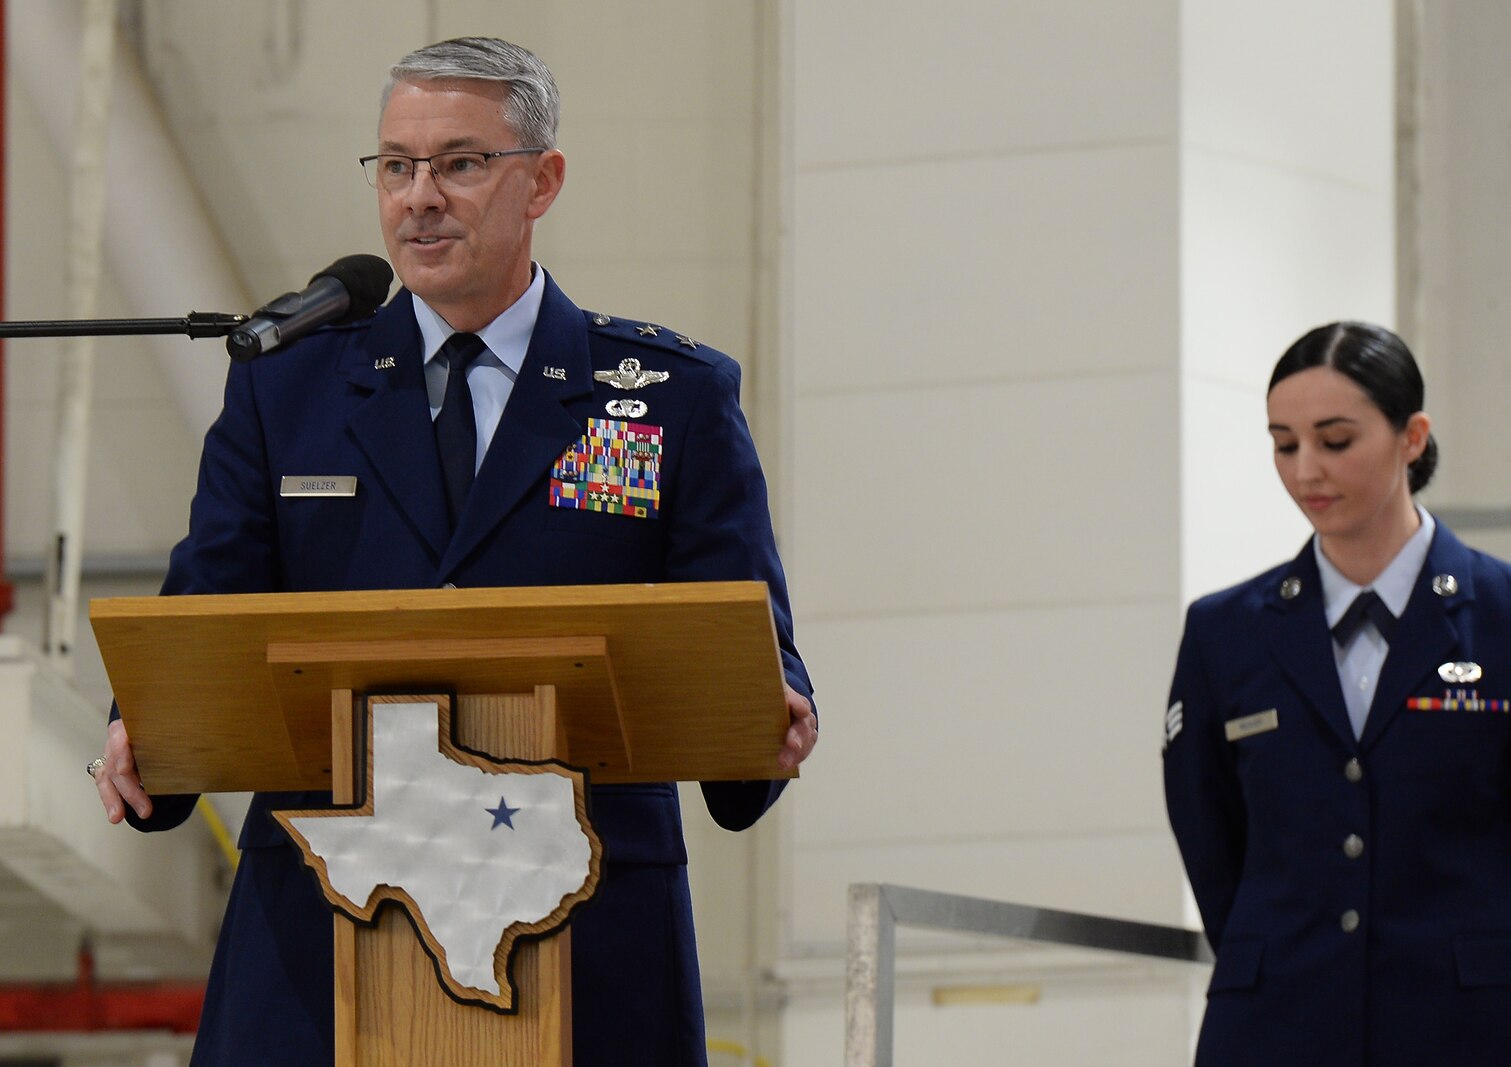 Maj Gen Suelzer articulates during the recent ceremonies as Senior Airmen Weaver stands by.